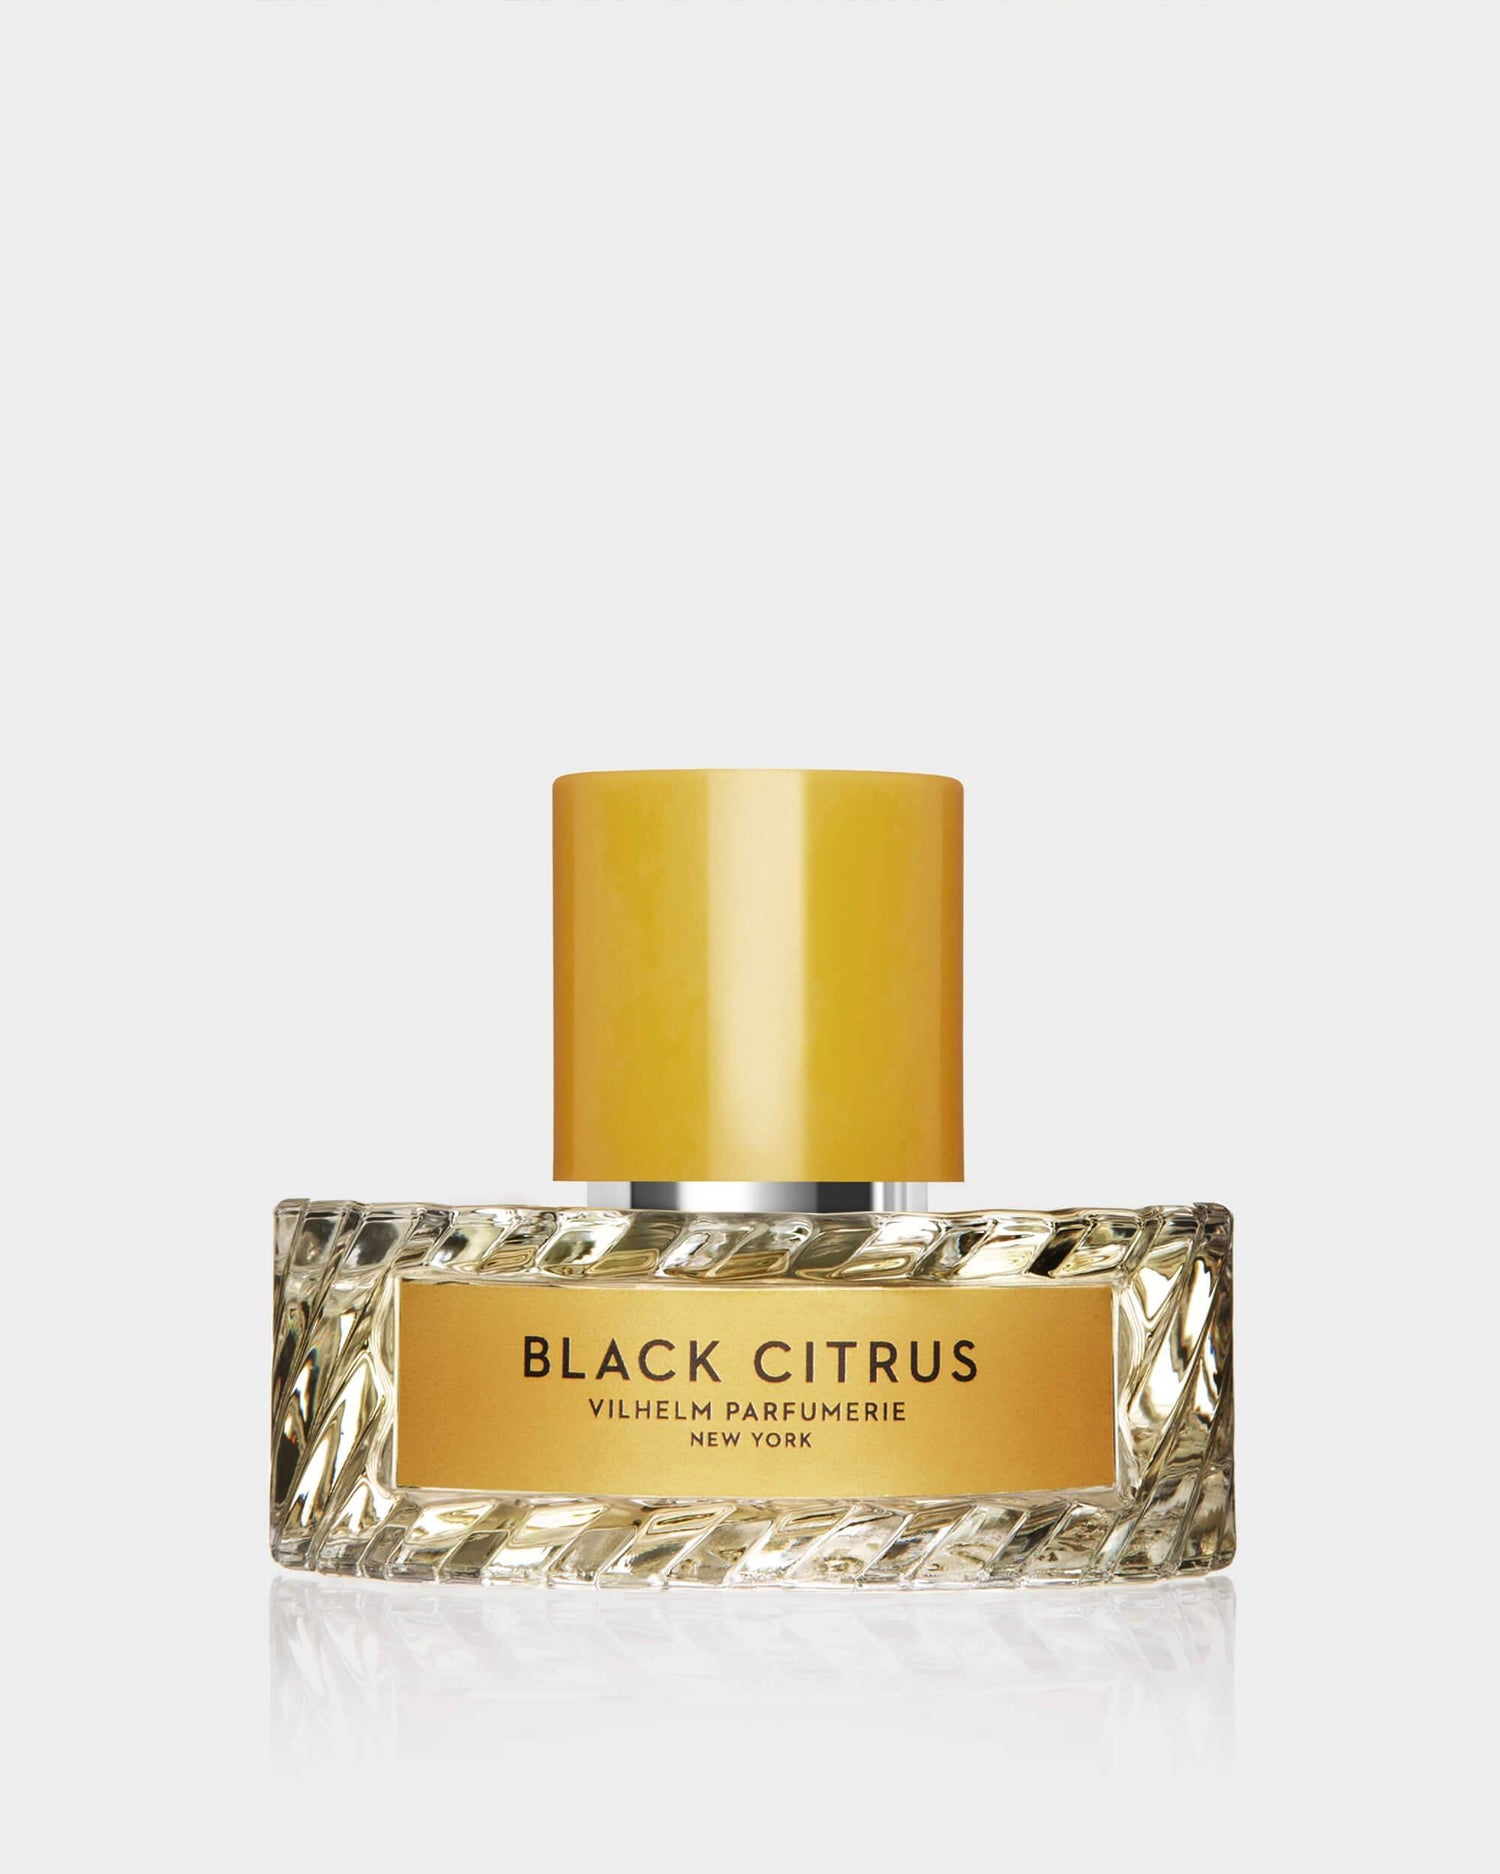 BLACK CITRUS - Vilhelm Parfumerie